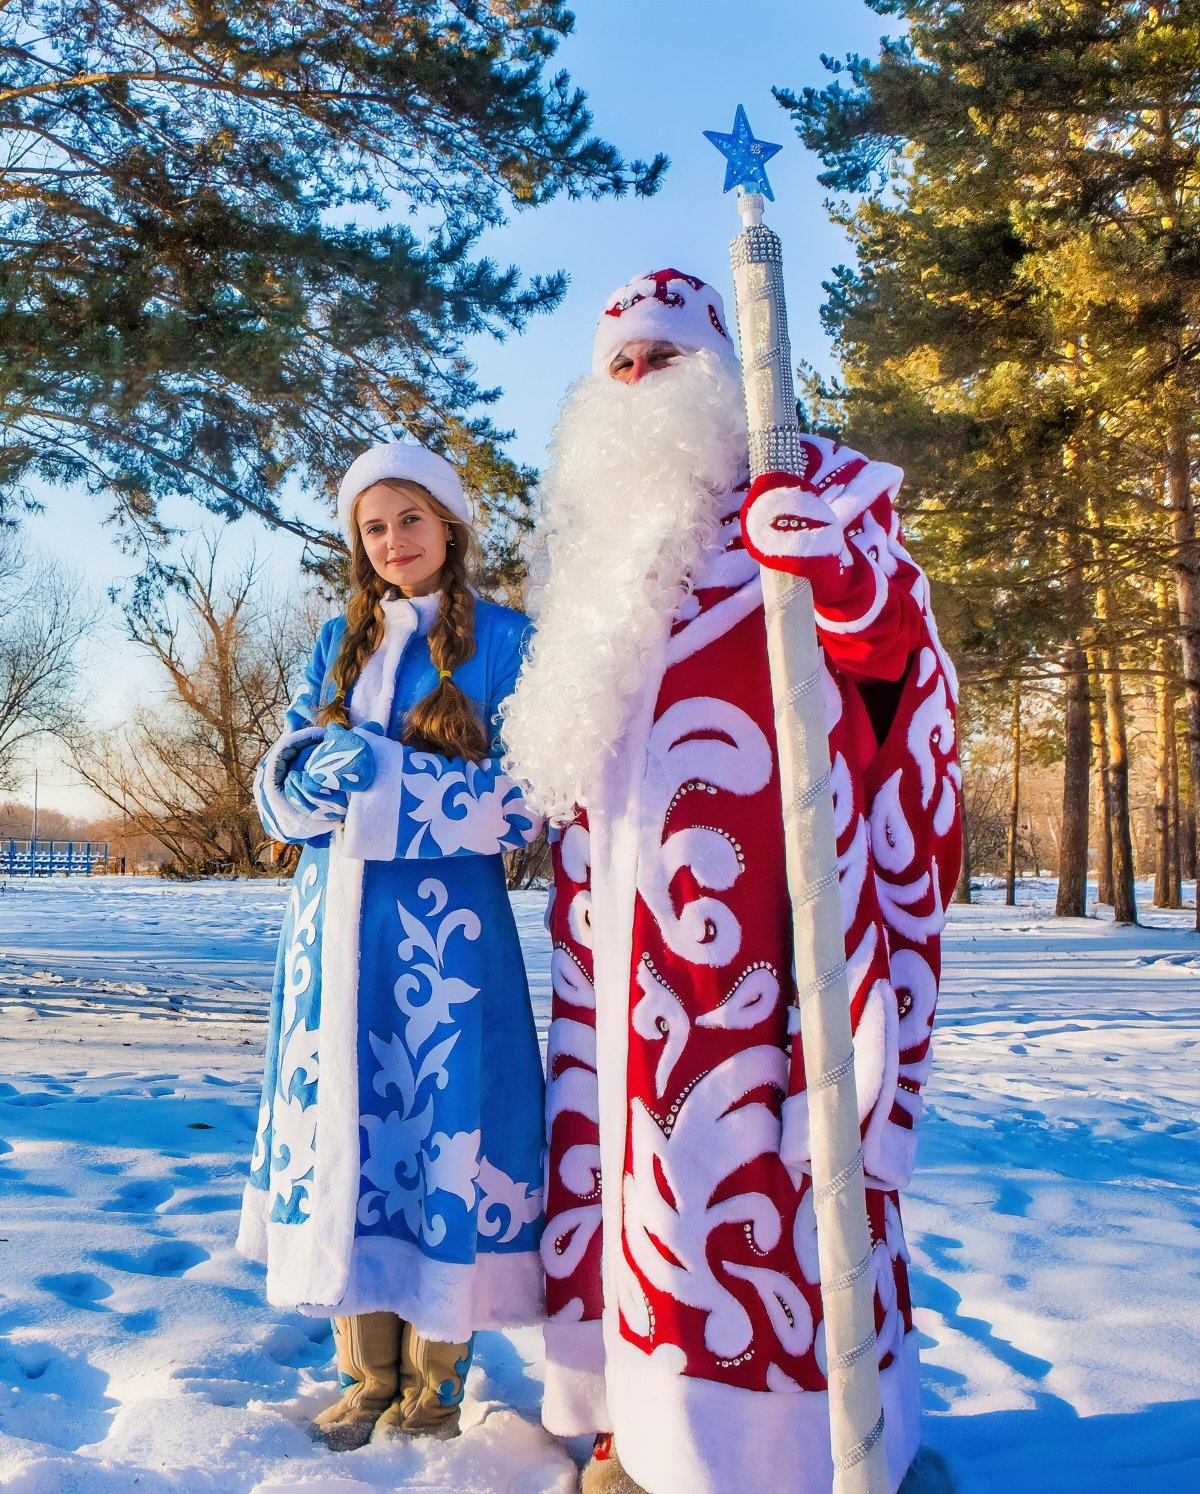 Noël orthodoxe russe et traditions de Sviatki, InfoMistico.com